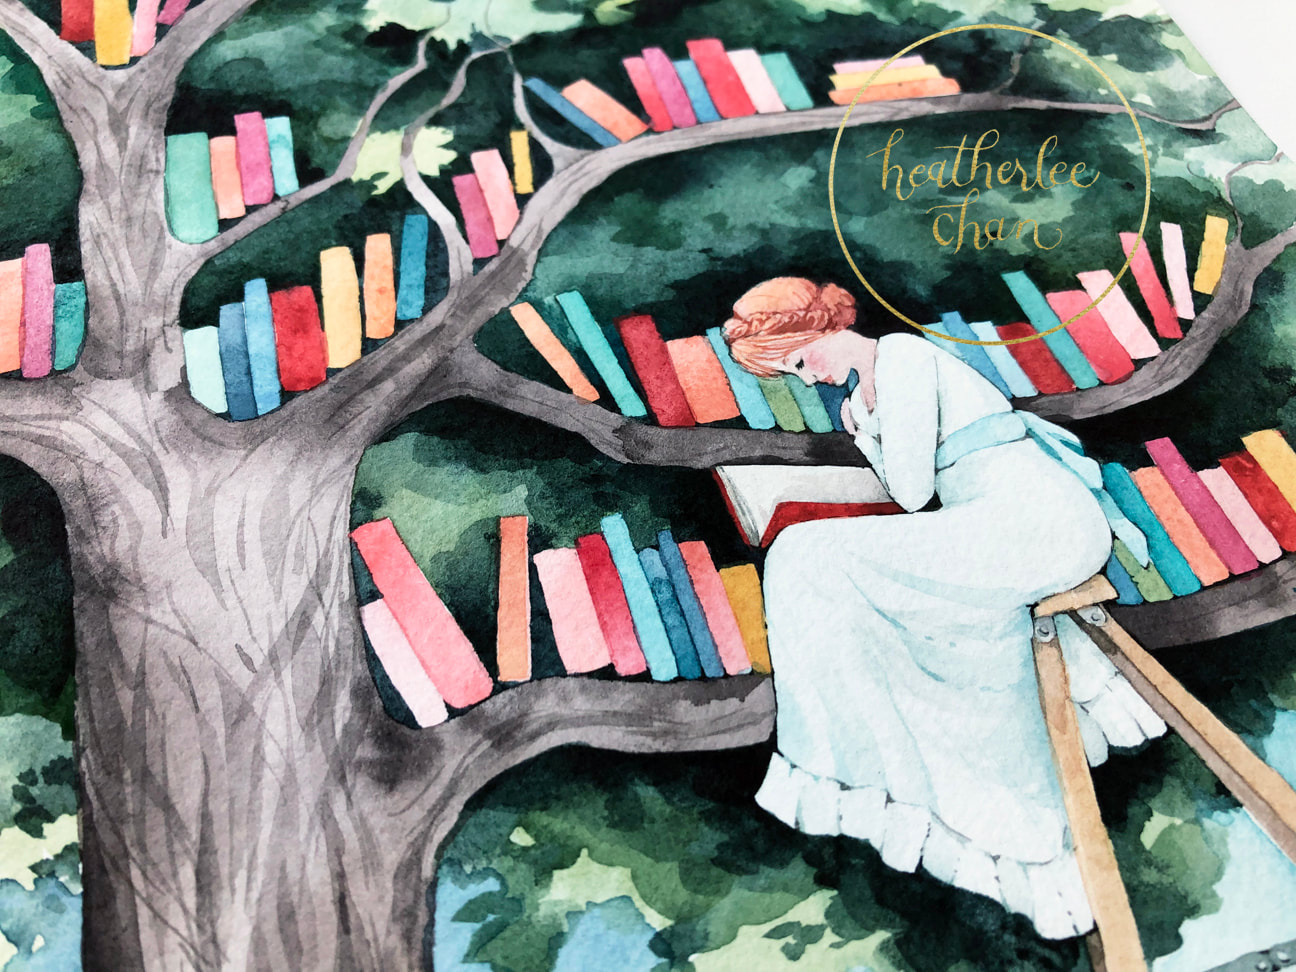 The Book Themed Art of Heatherlee Chan #BookishArt @heatherleechan  #BookThemedArt